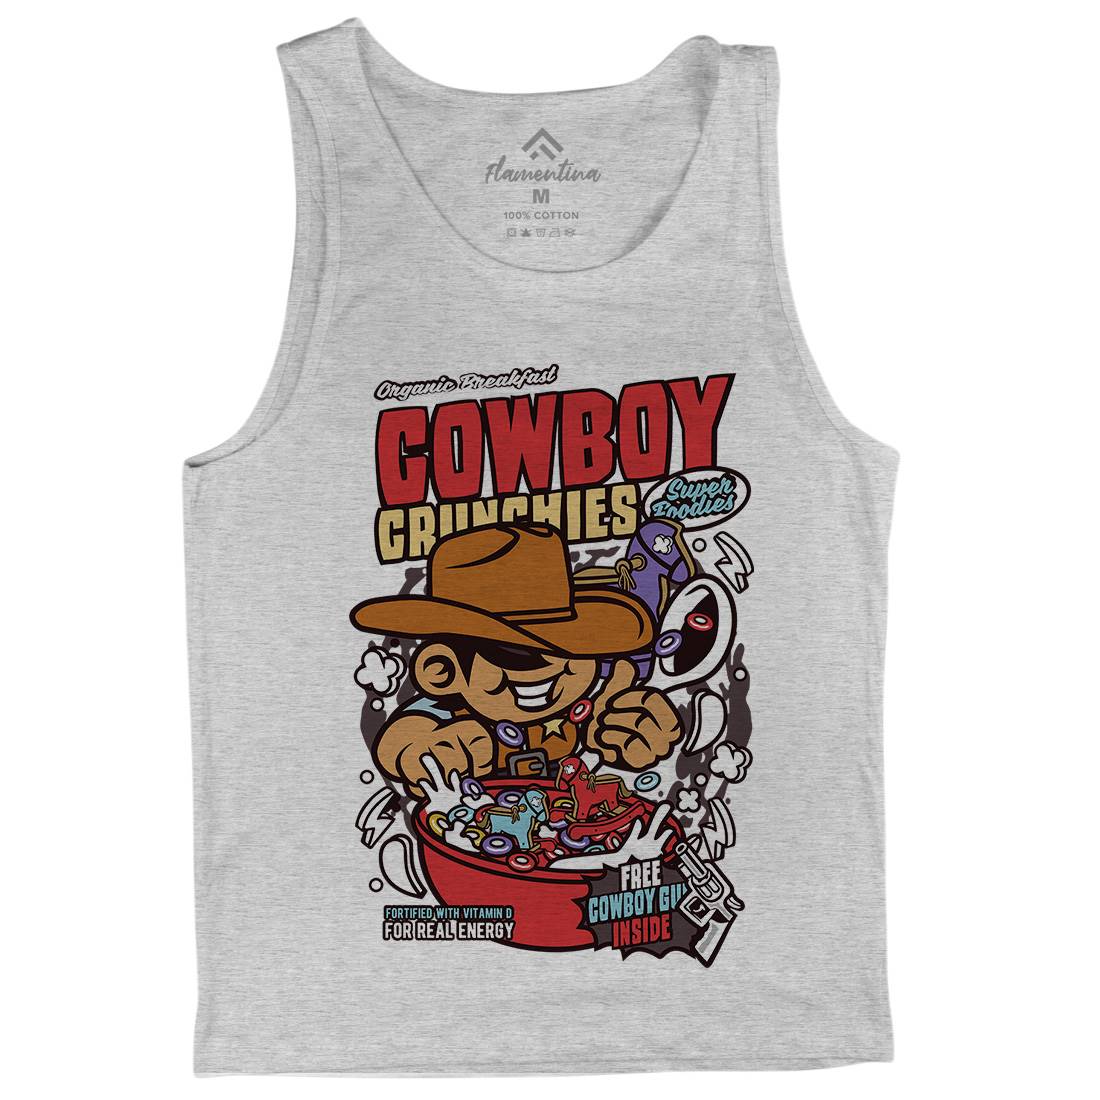 Cowboy Crunchies Mens Tank Top Vest Food C529